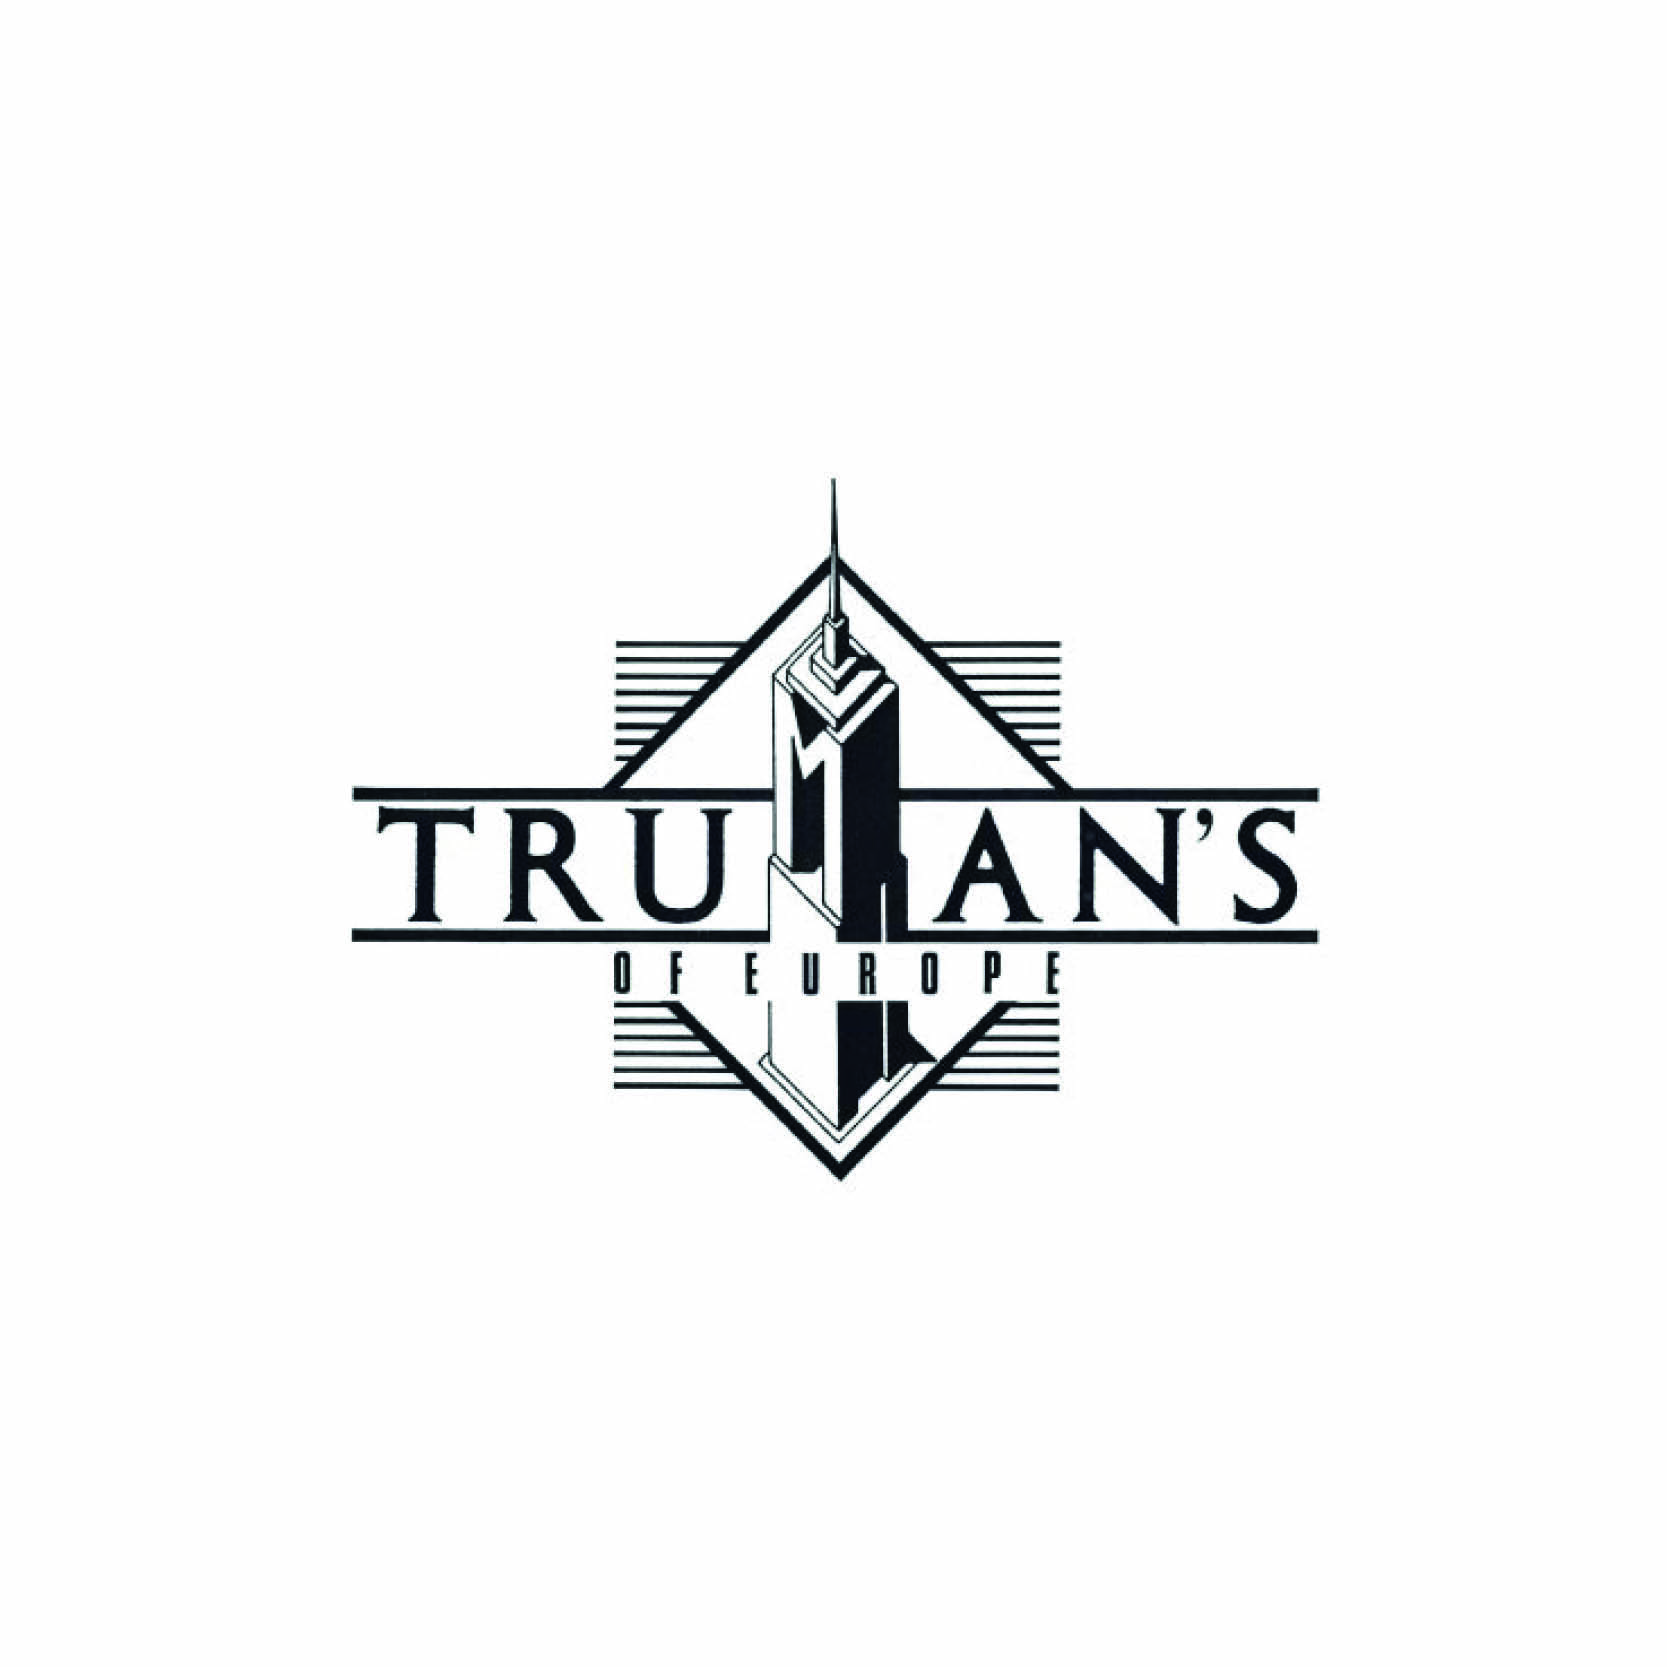 Truman's of europe logo